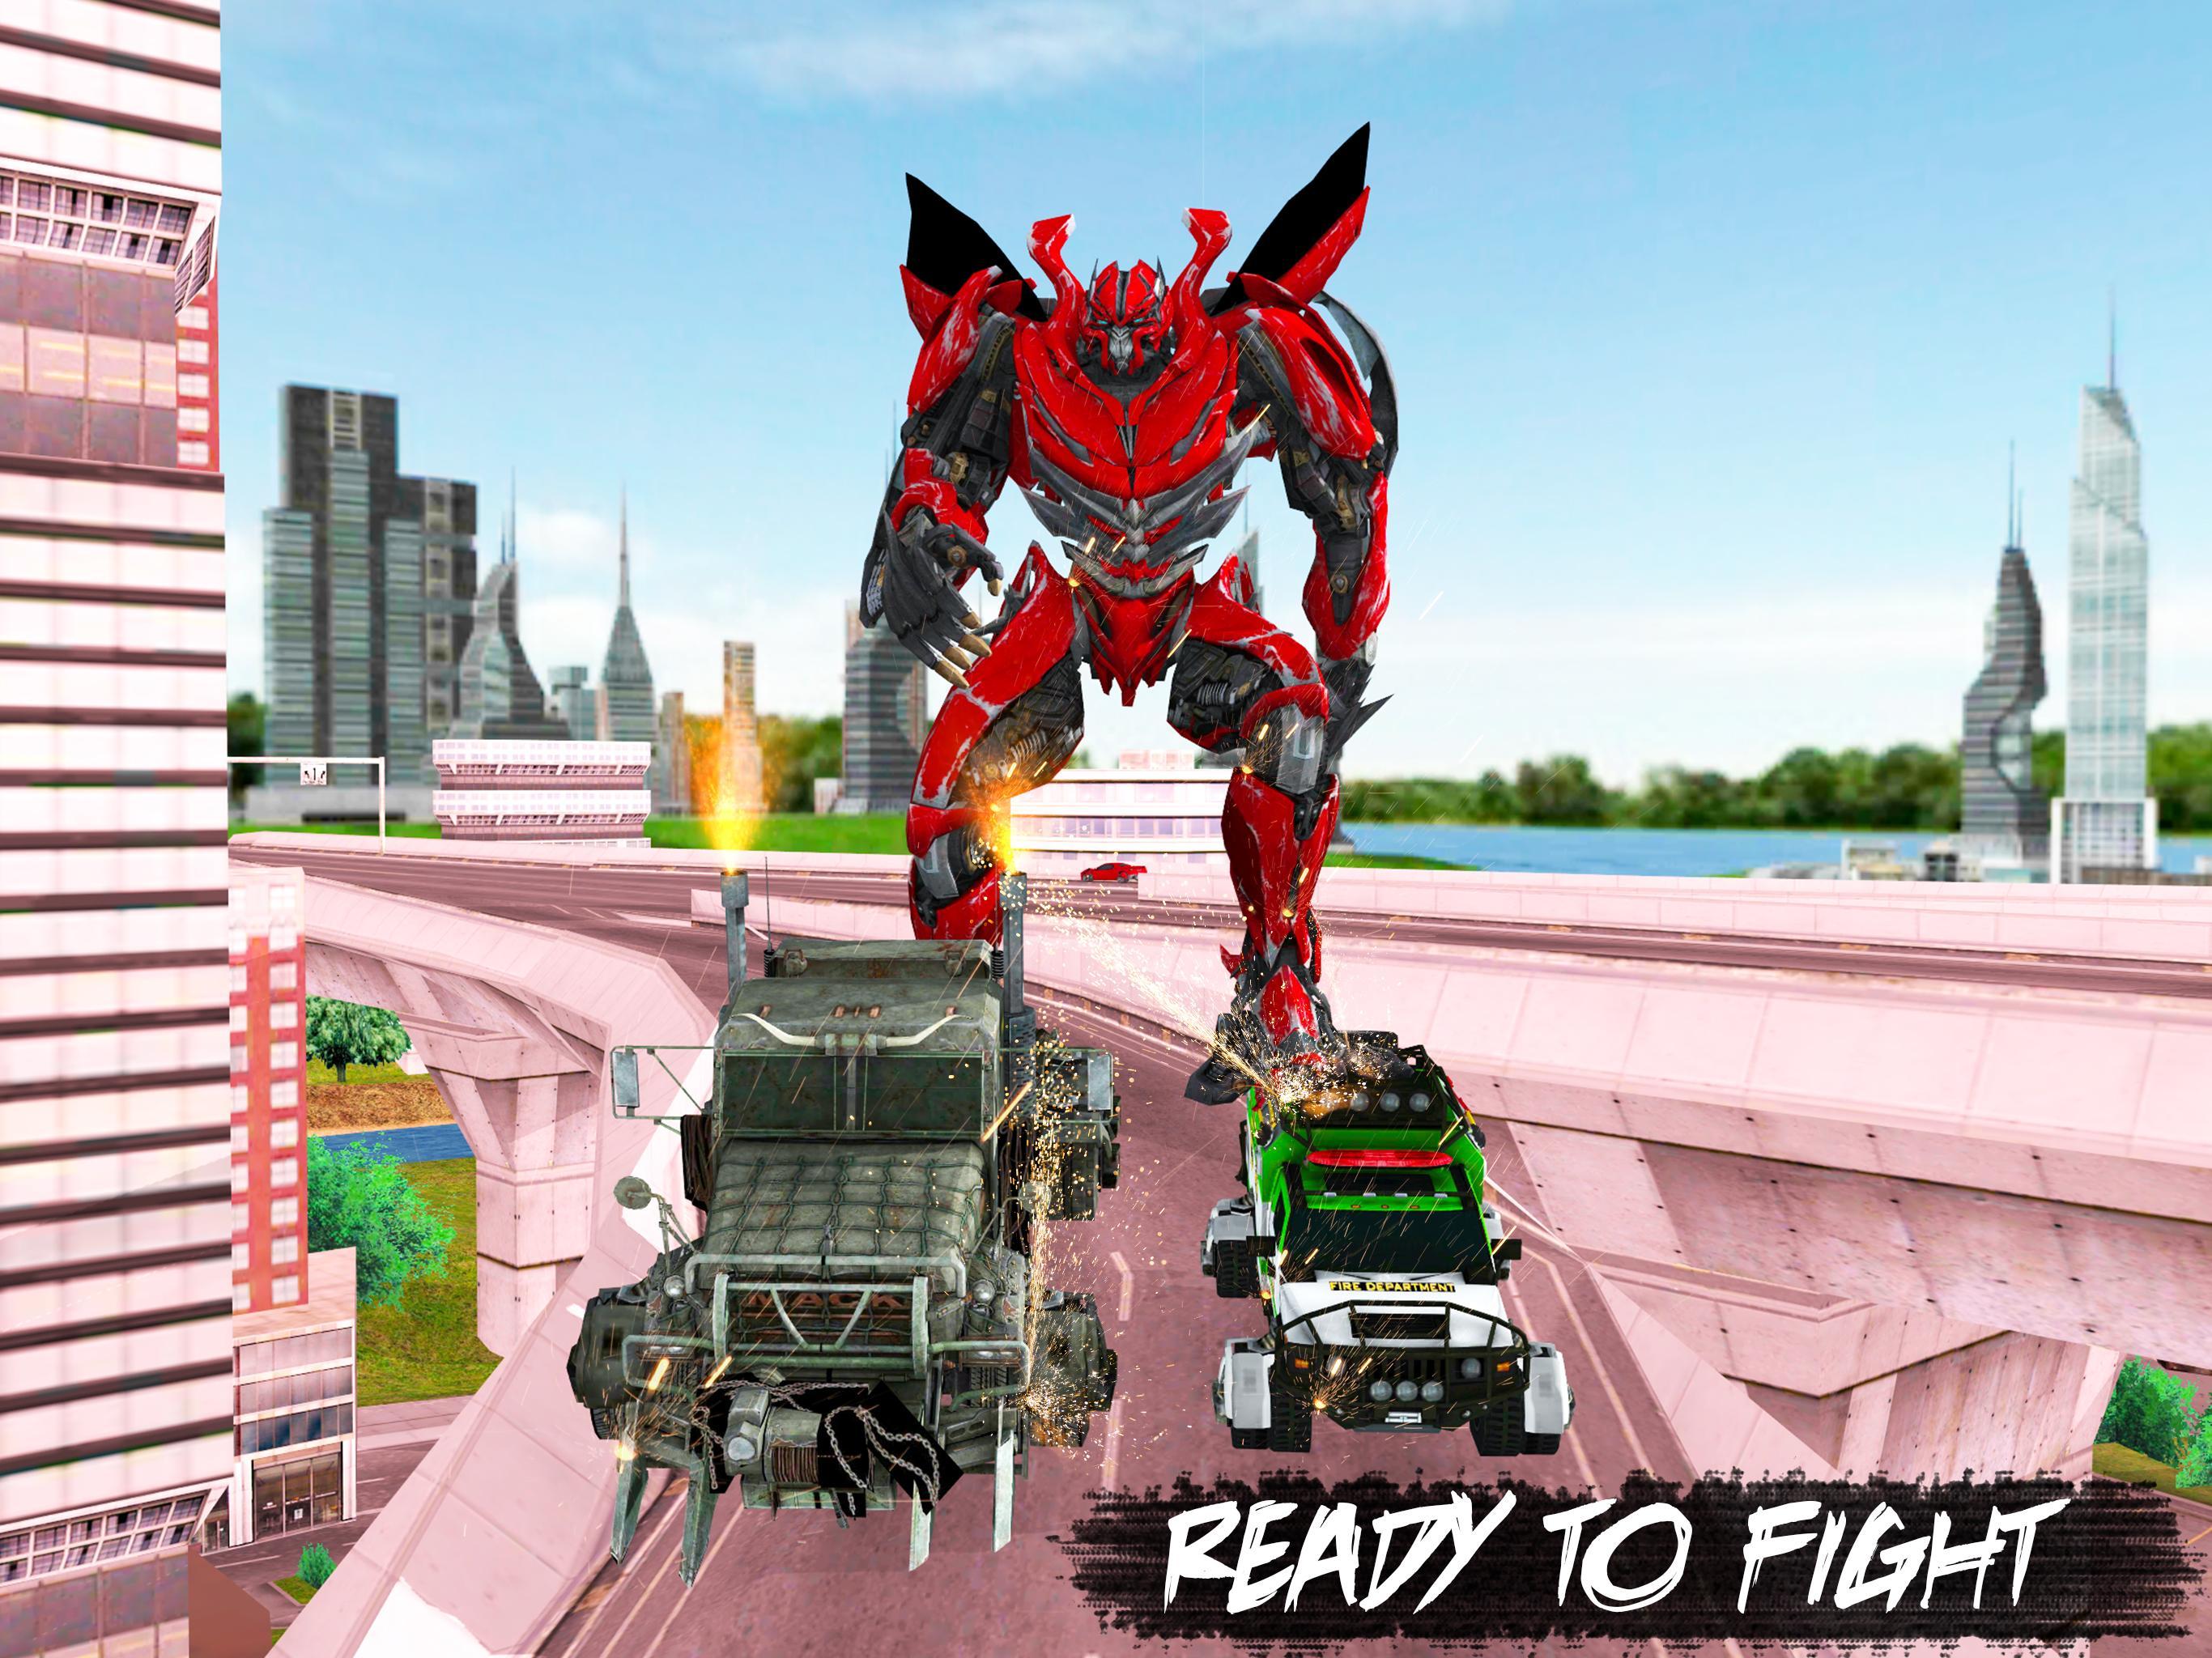 Monster Robot Superhero Transformer Games for Android - APK Download